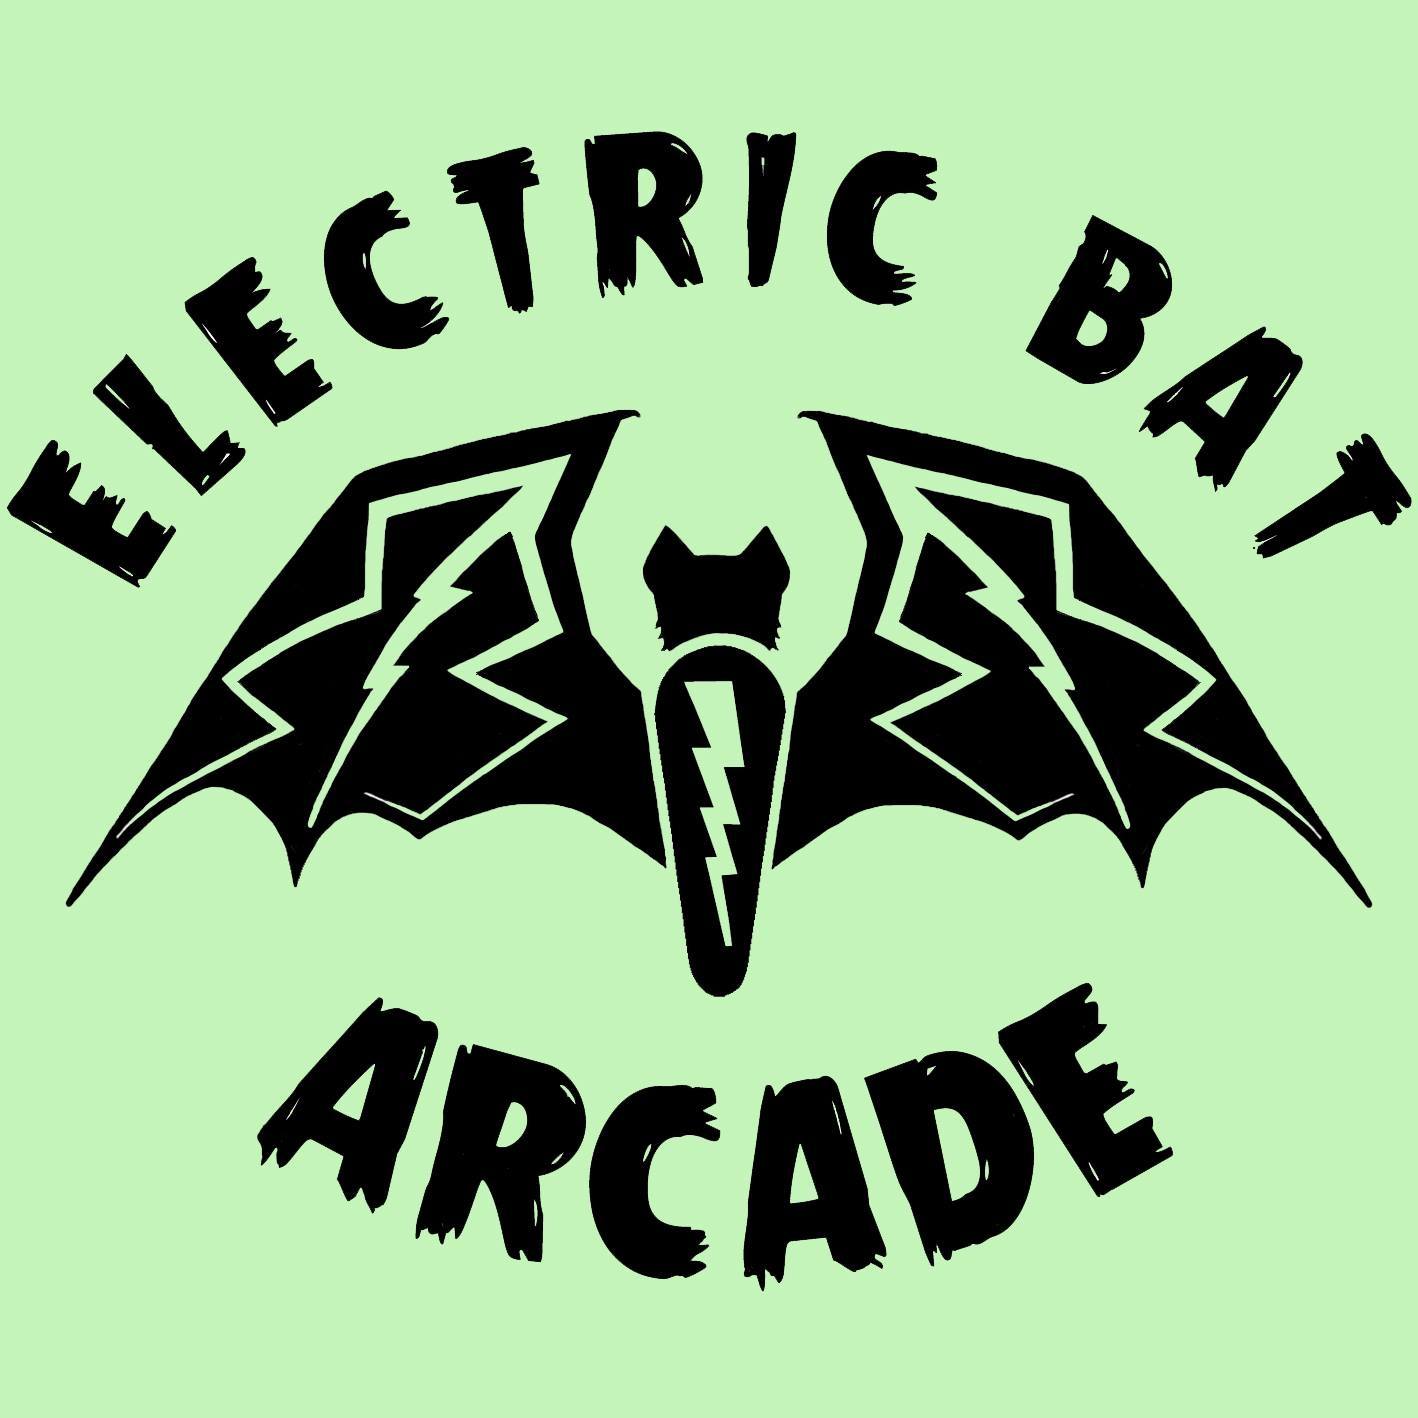 Electric Bat Arcade